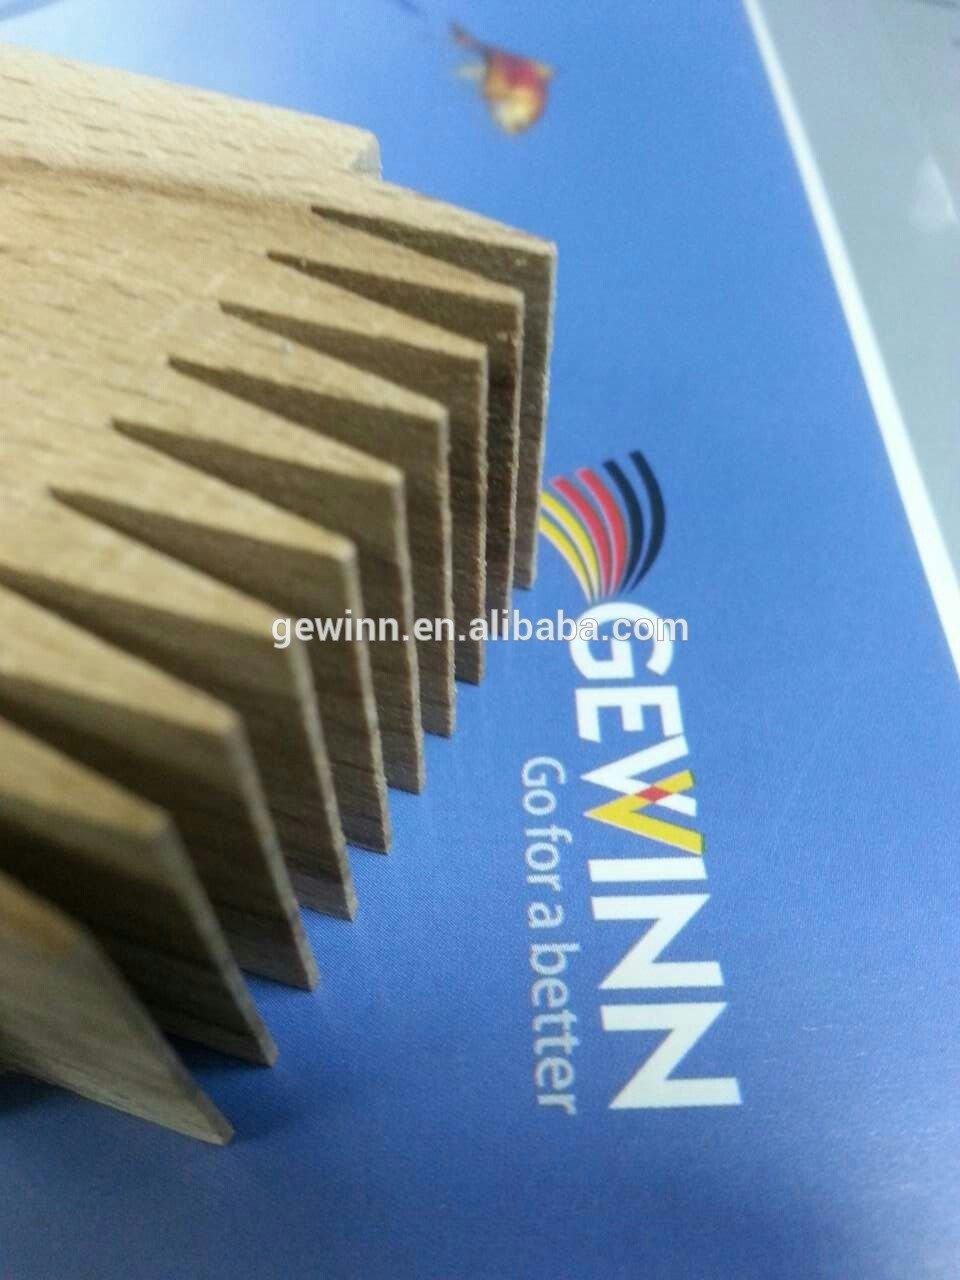 chinese cnc industrial woodworking tools Gewinn Brand